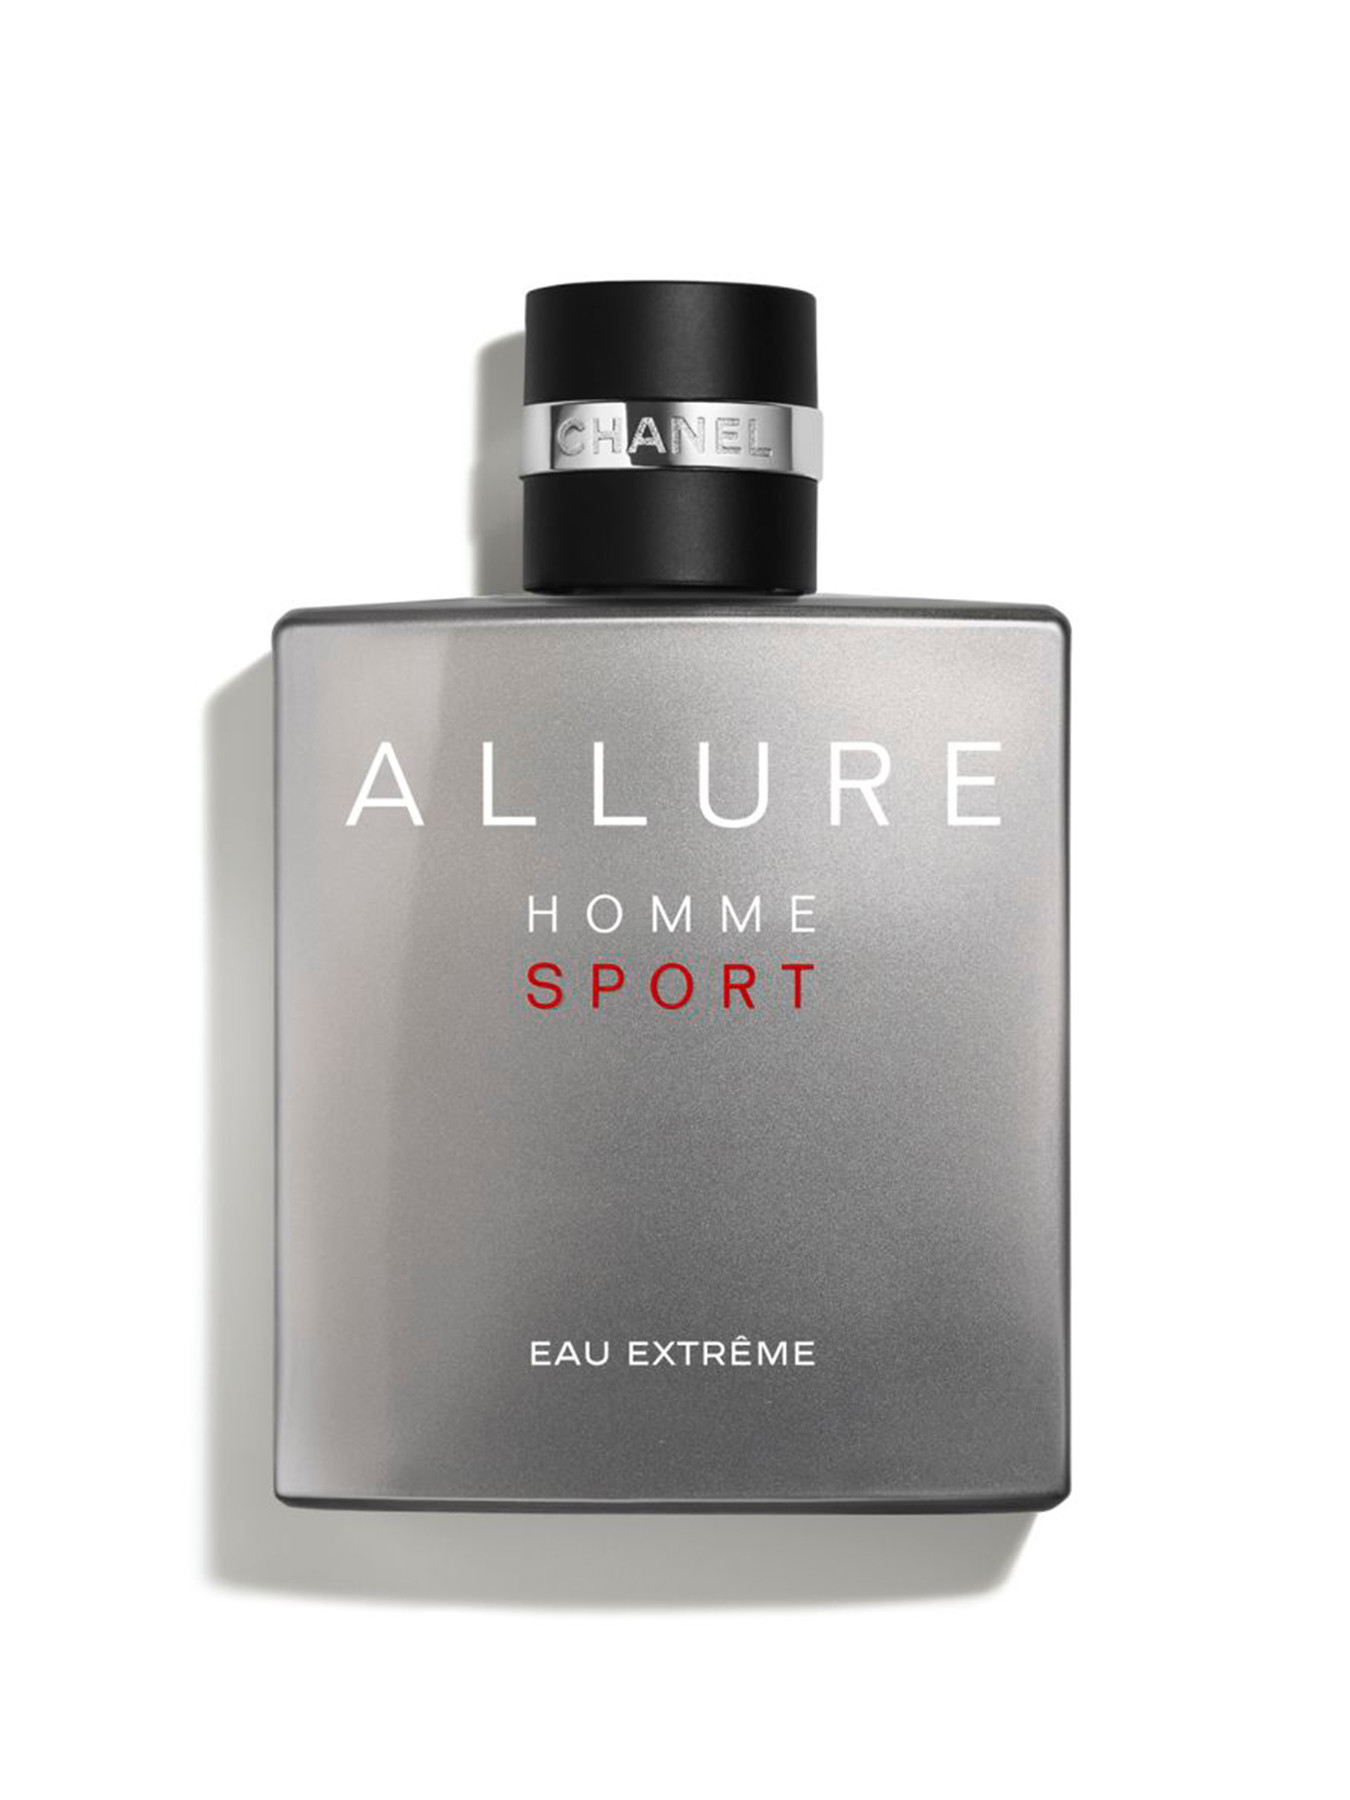 Туалетная вода chanel sport. Allure homme Sport 100ml. Шанель Аллюр хом спорт. Chanel Allure Sport 100 ml. Allure homme Sport туалетная вода 100 мл.